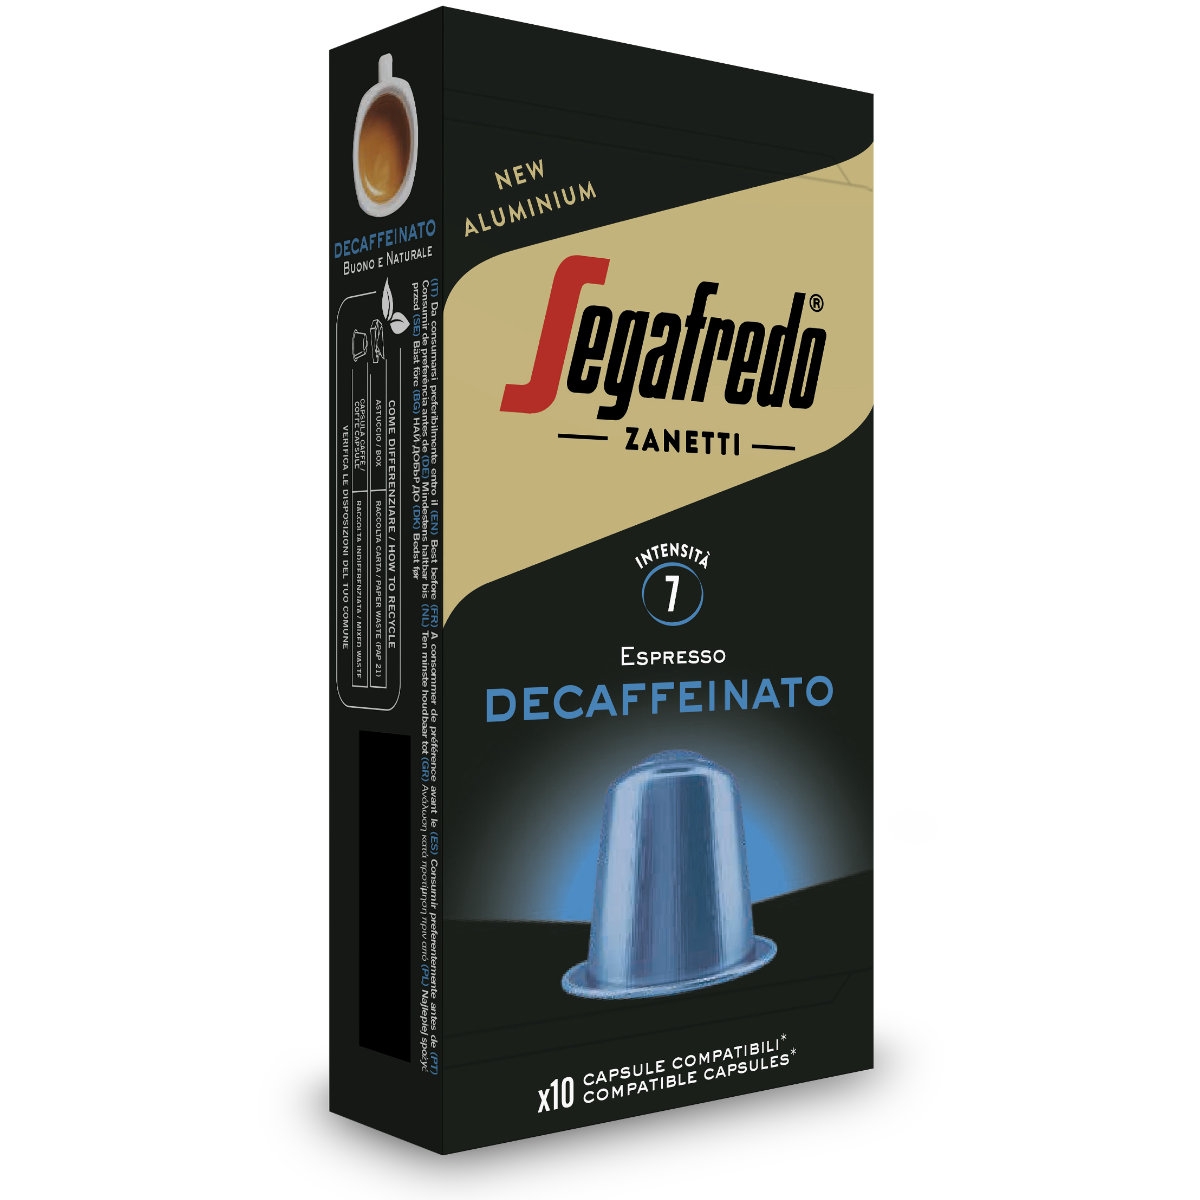 Segafredo Nespresso * Decaffeinato Aluminum Coffee Pods 10